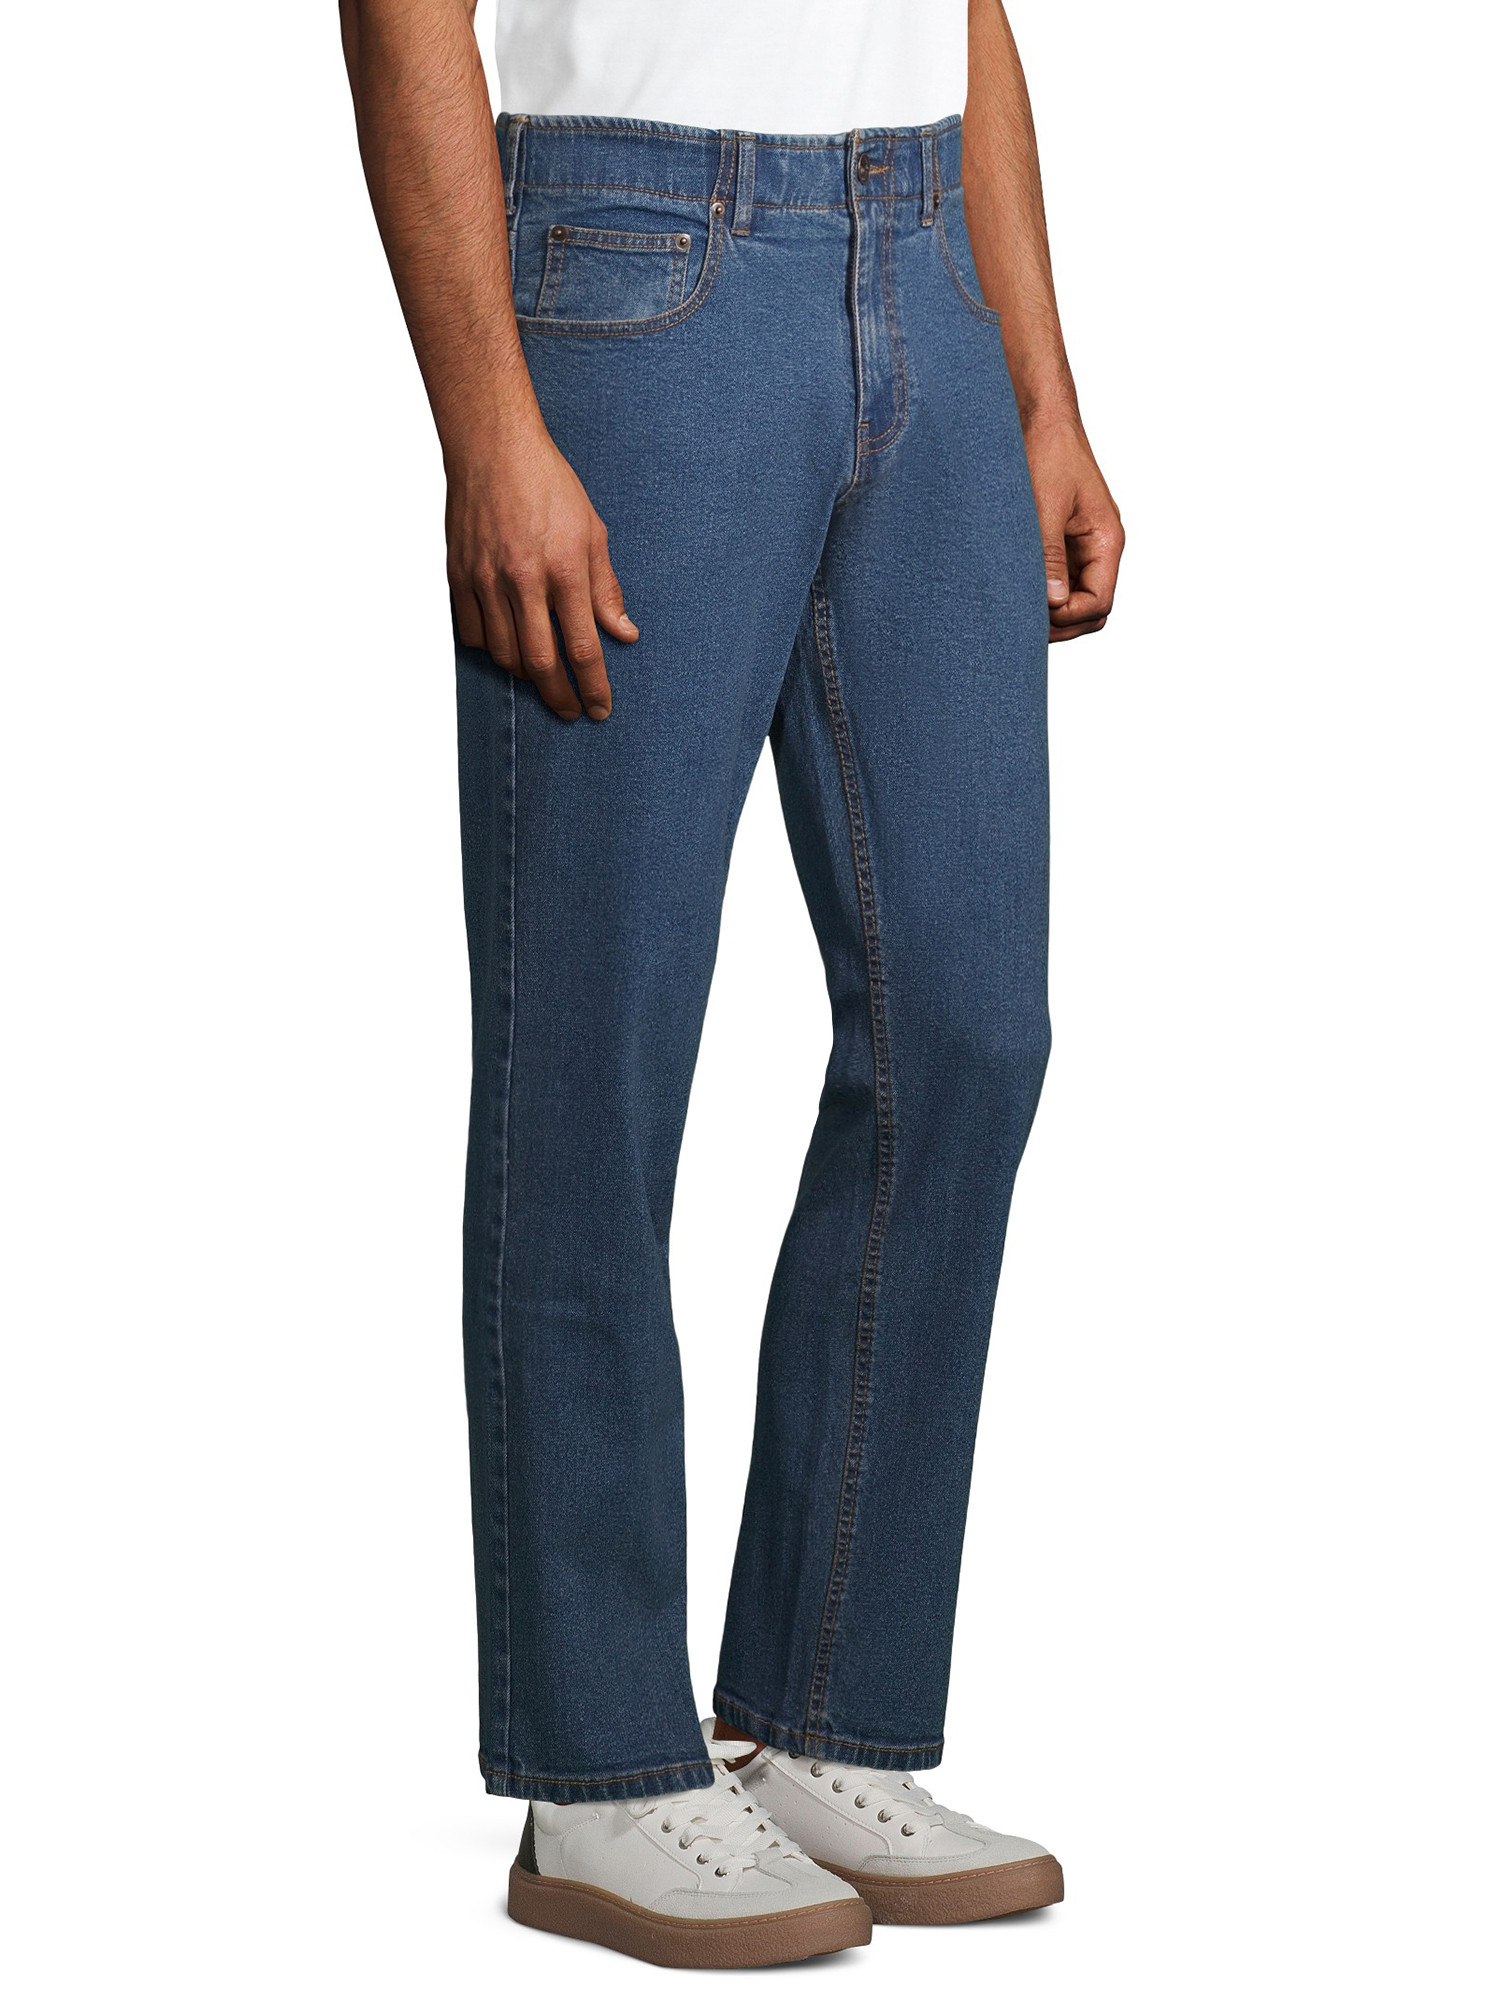 Hollywood Jeans Men's Active Flex Denim Straight Fit Jeans - image 2 of 6